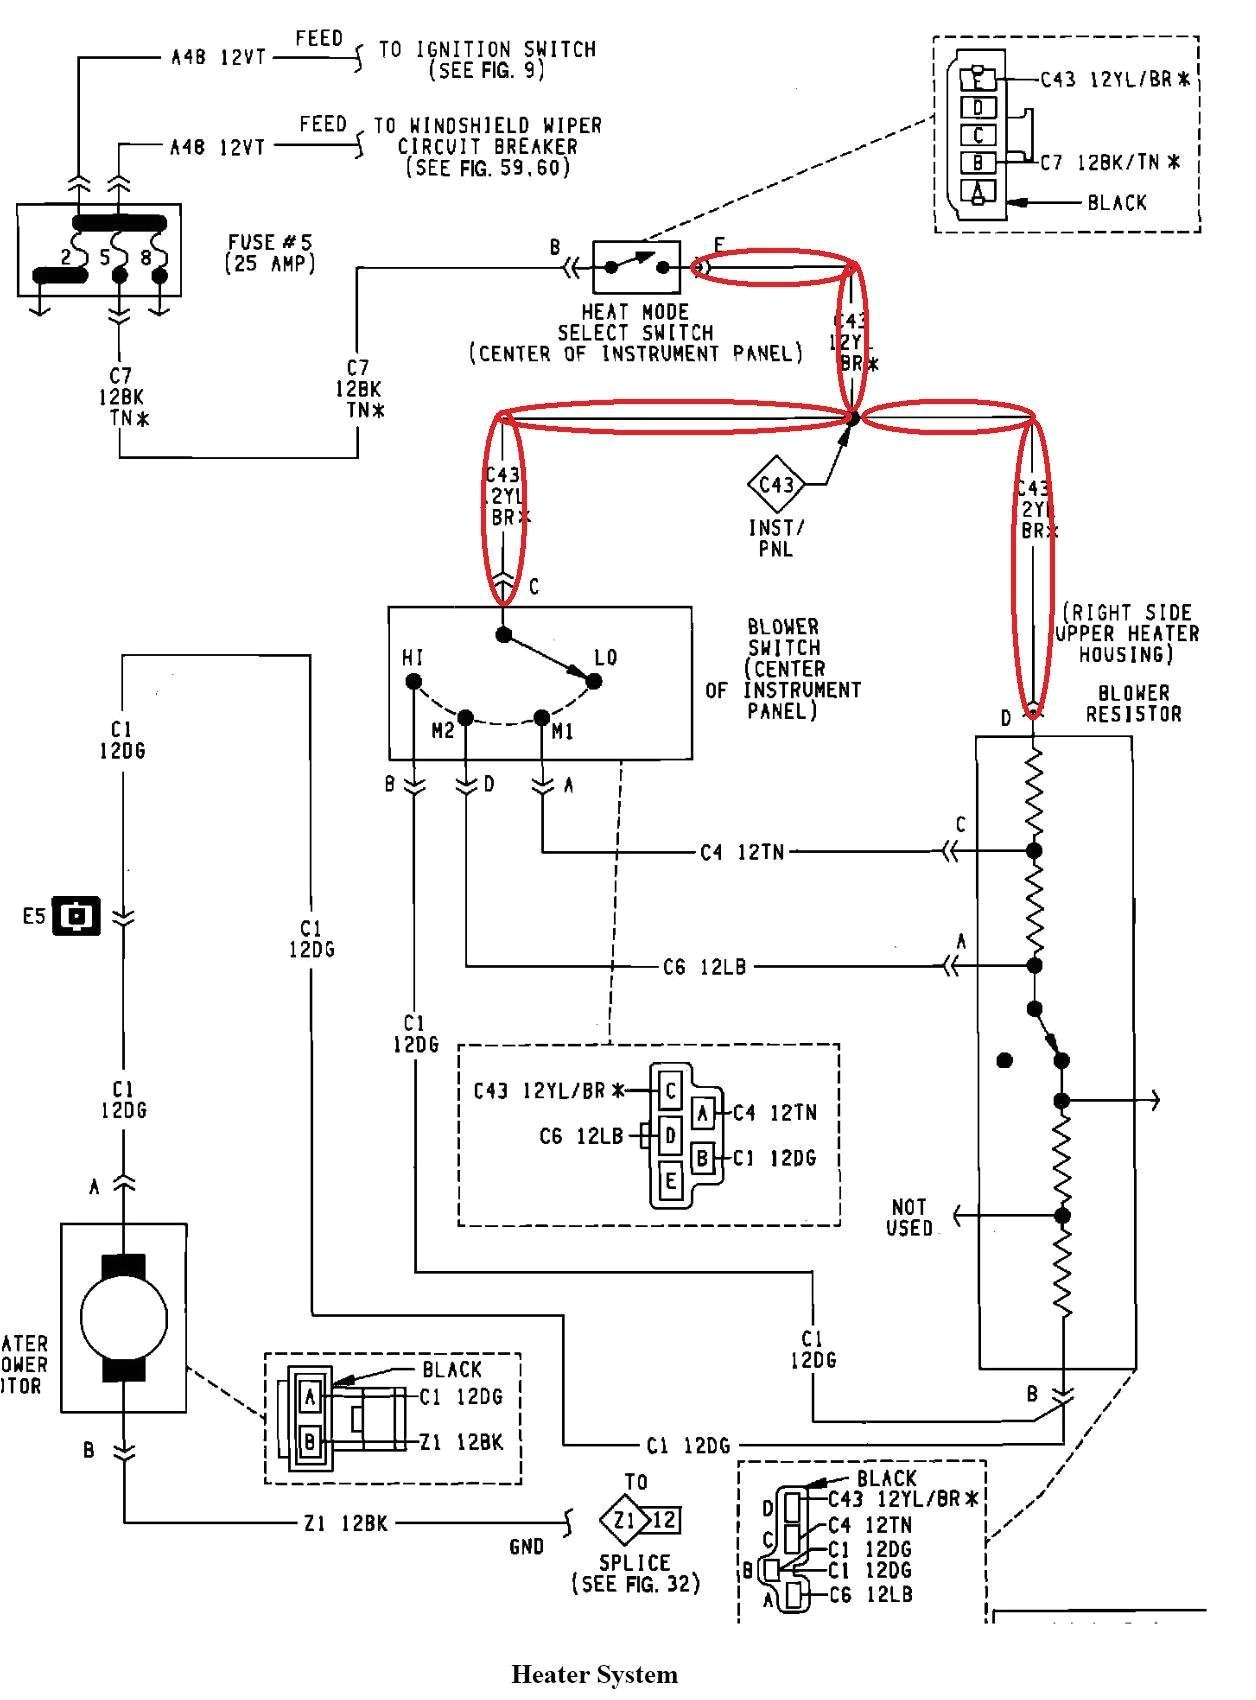 ezgo headlight wiring diagram wiring diagrams second ezgo txt golf cart headlight wiring diagram